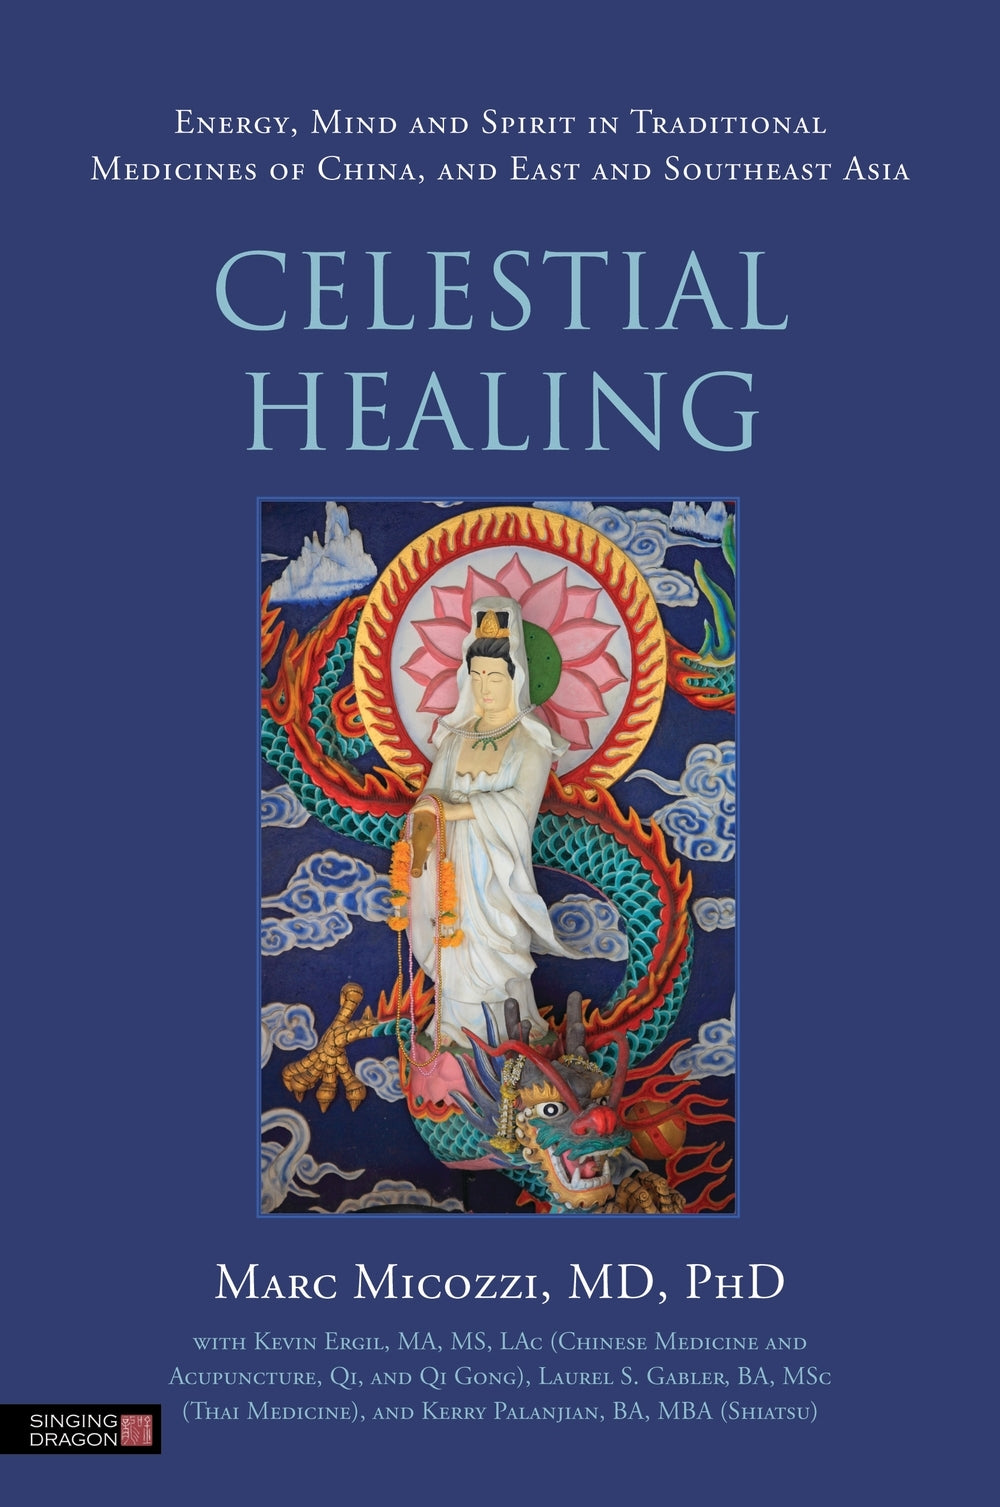 Celestial Healing by Marc Micozzi